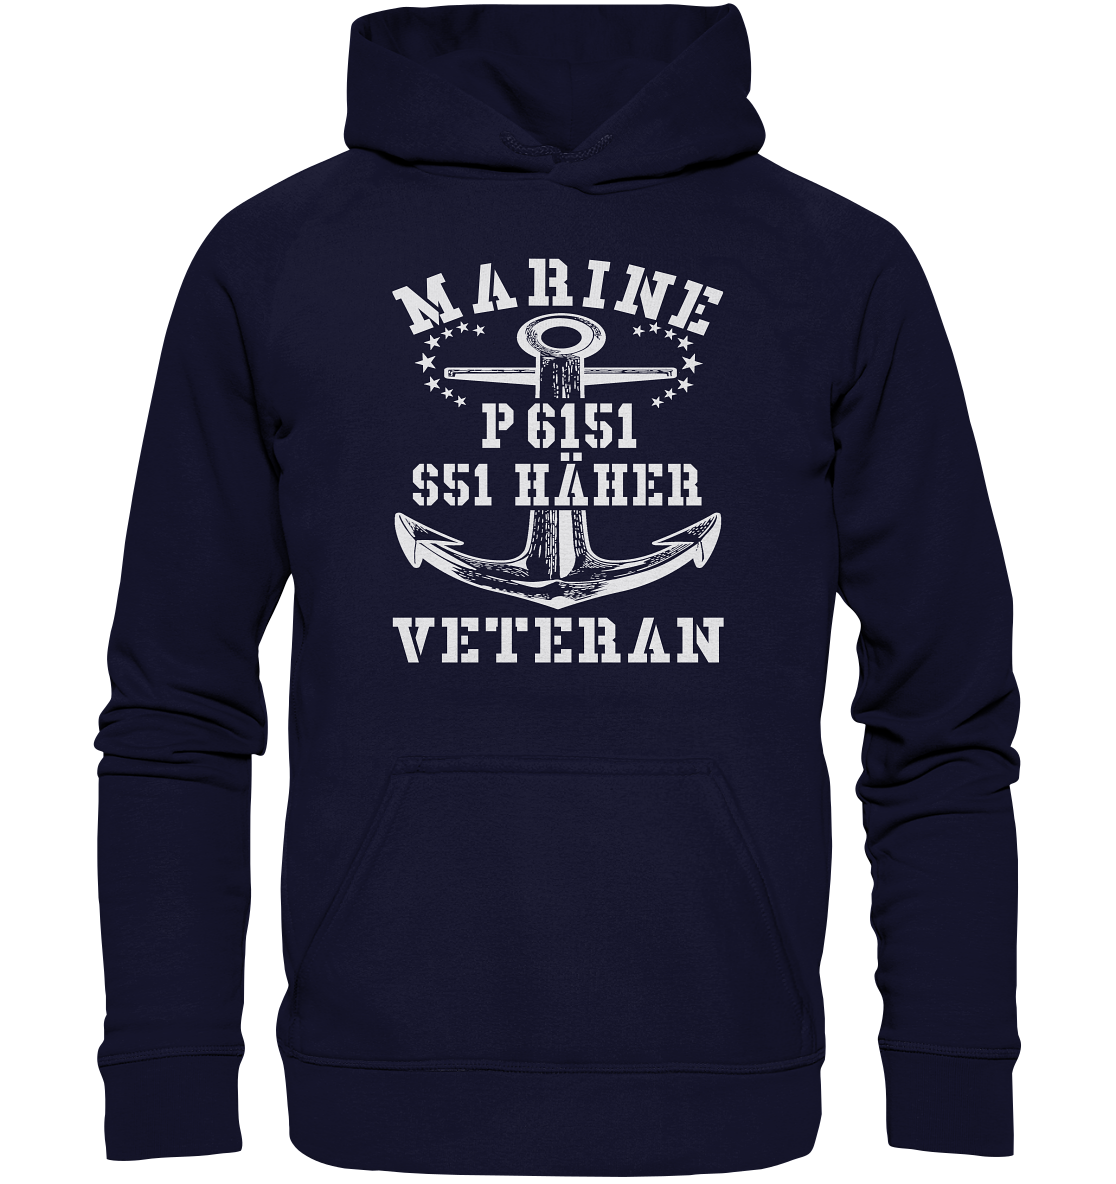 P6151 S51 HÄHER Marine Veteran - Basic Unisex Hoodie